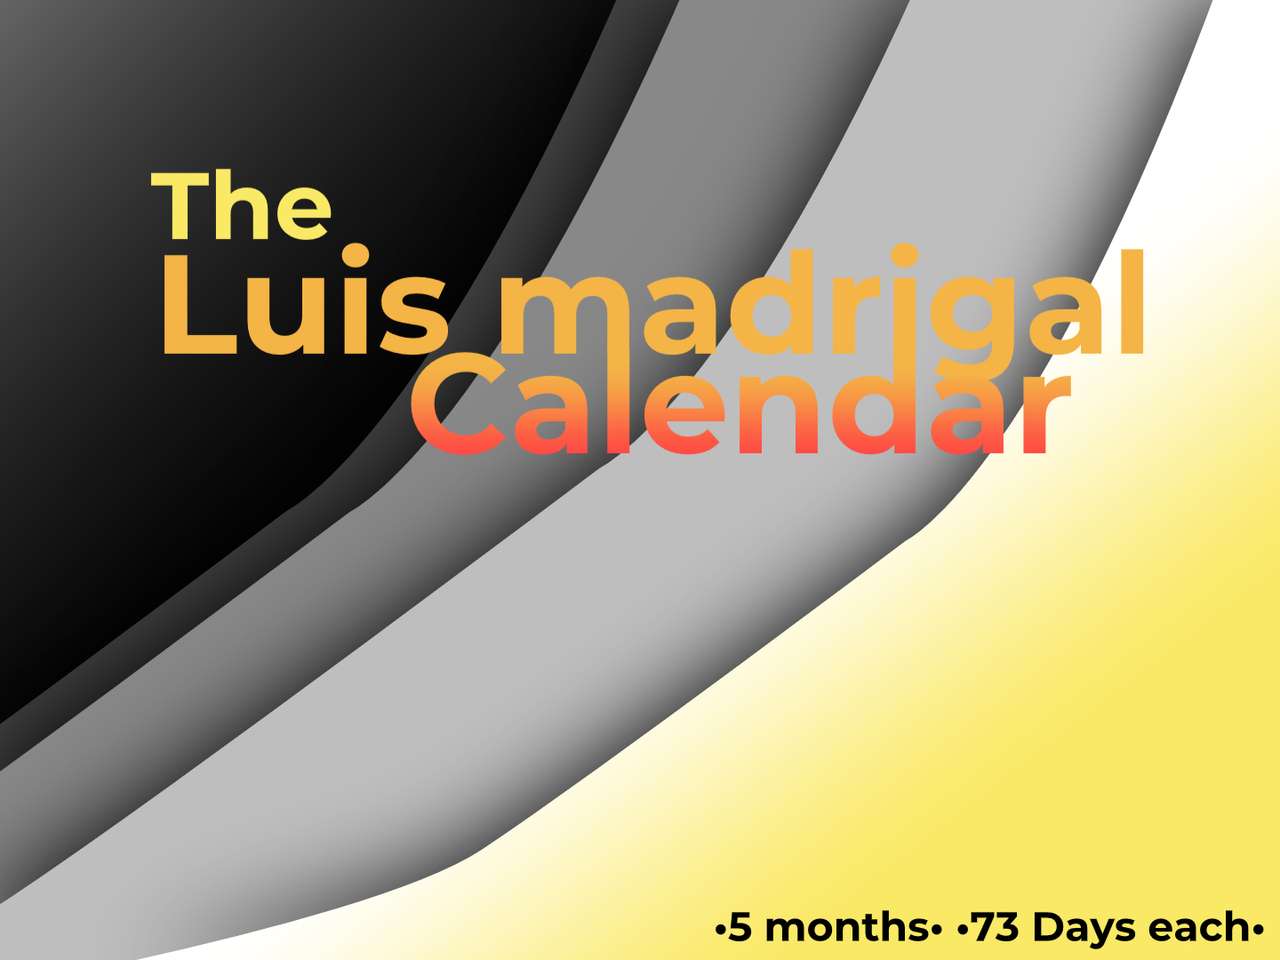 The Luis Madrigal Calendar online puzzle